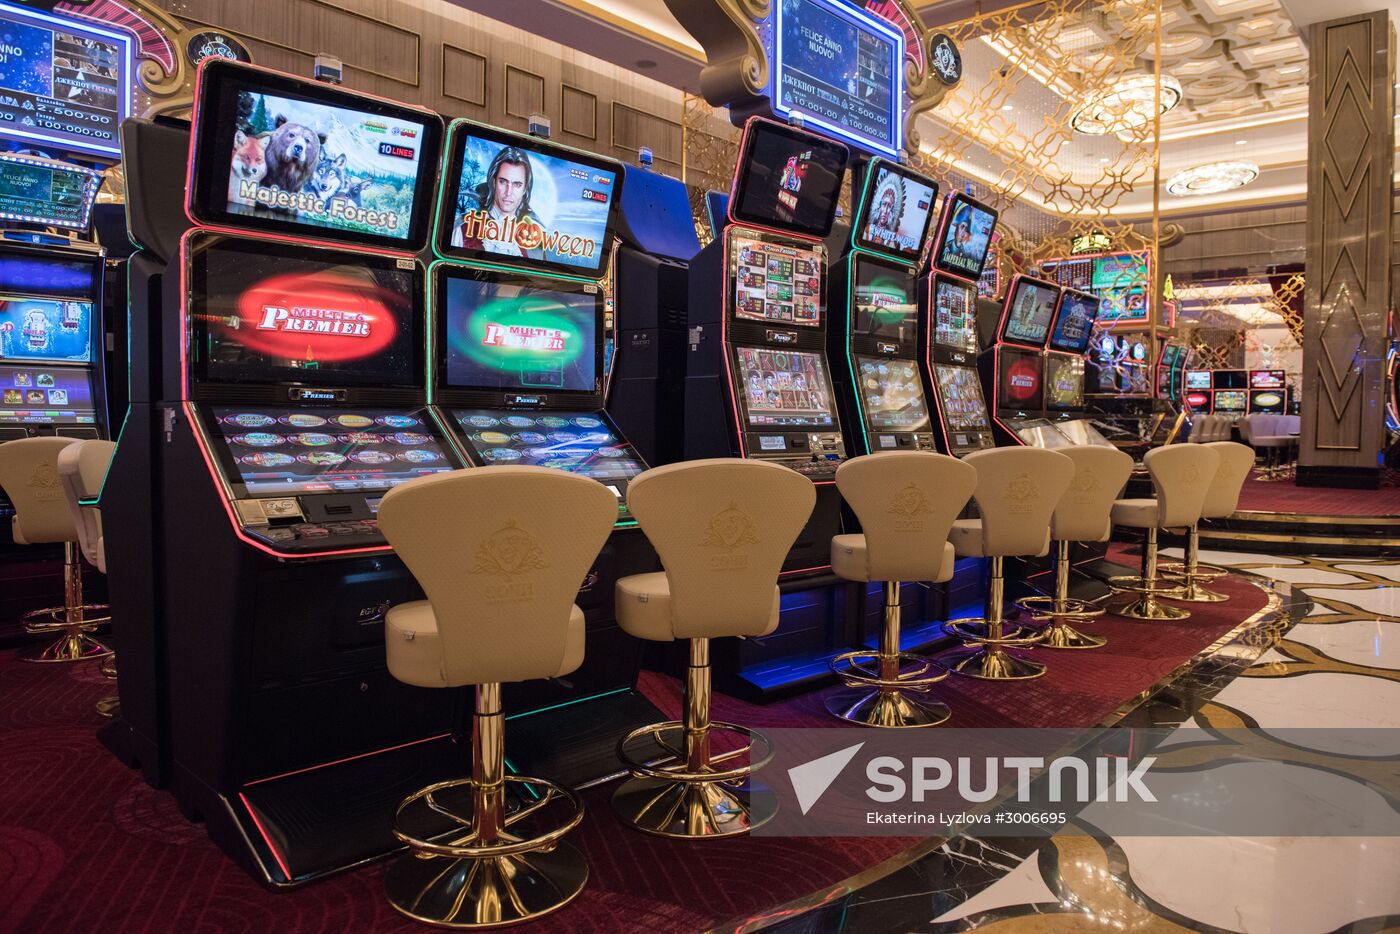 First casino opened in Krasnaya Polyana